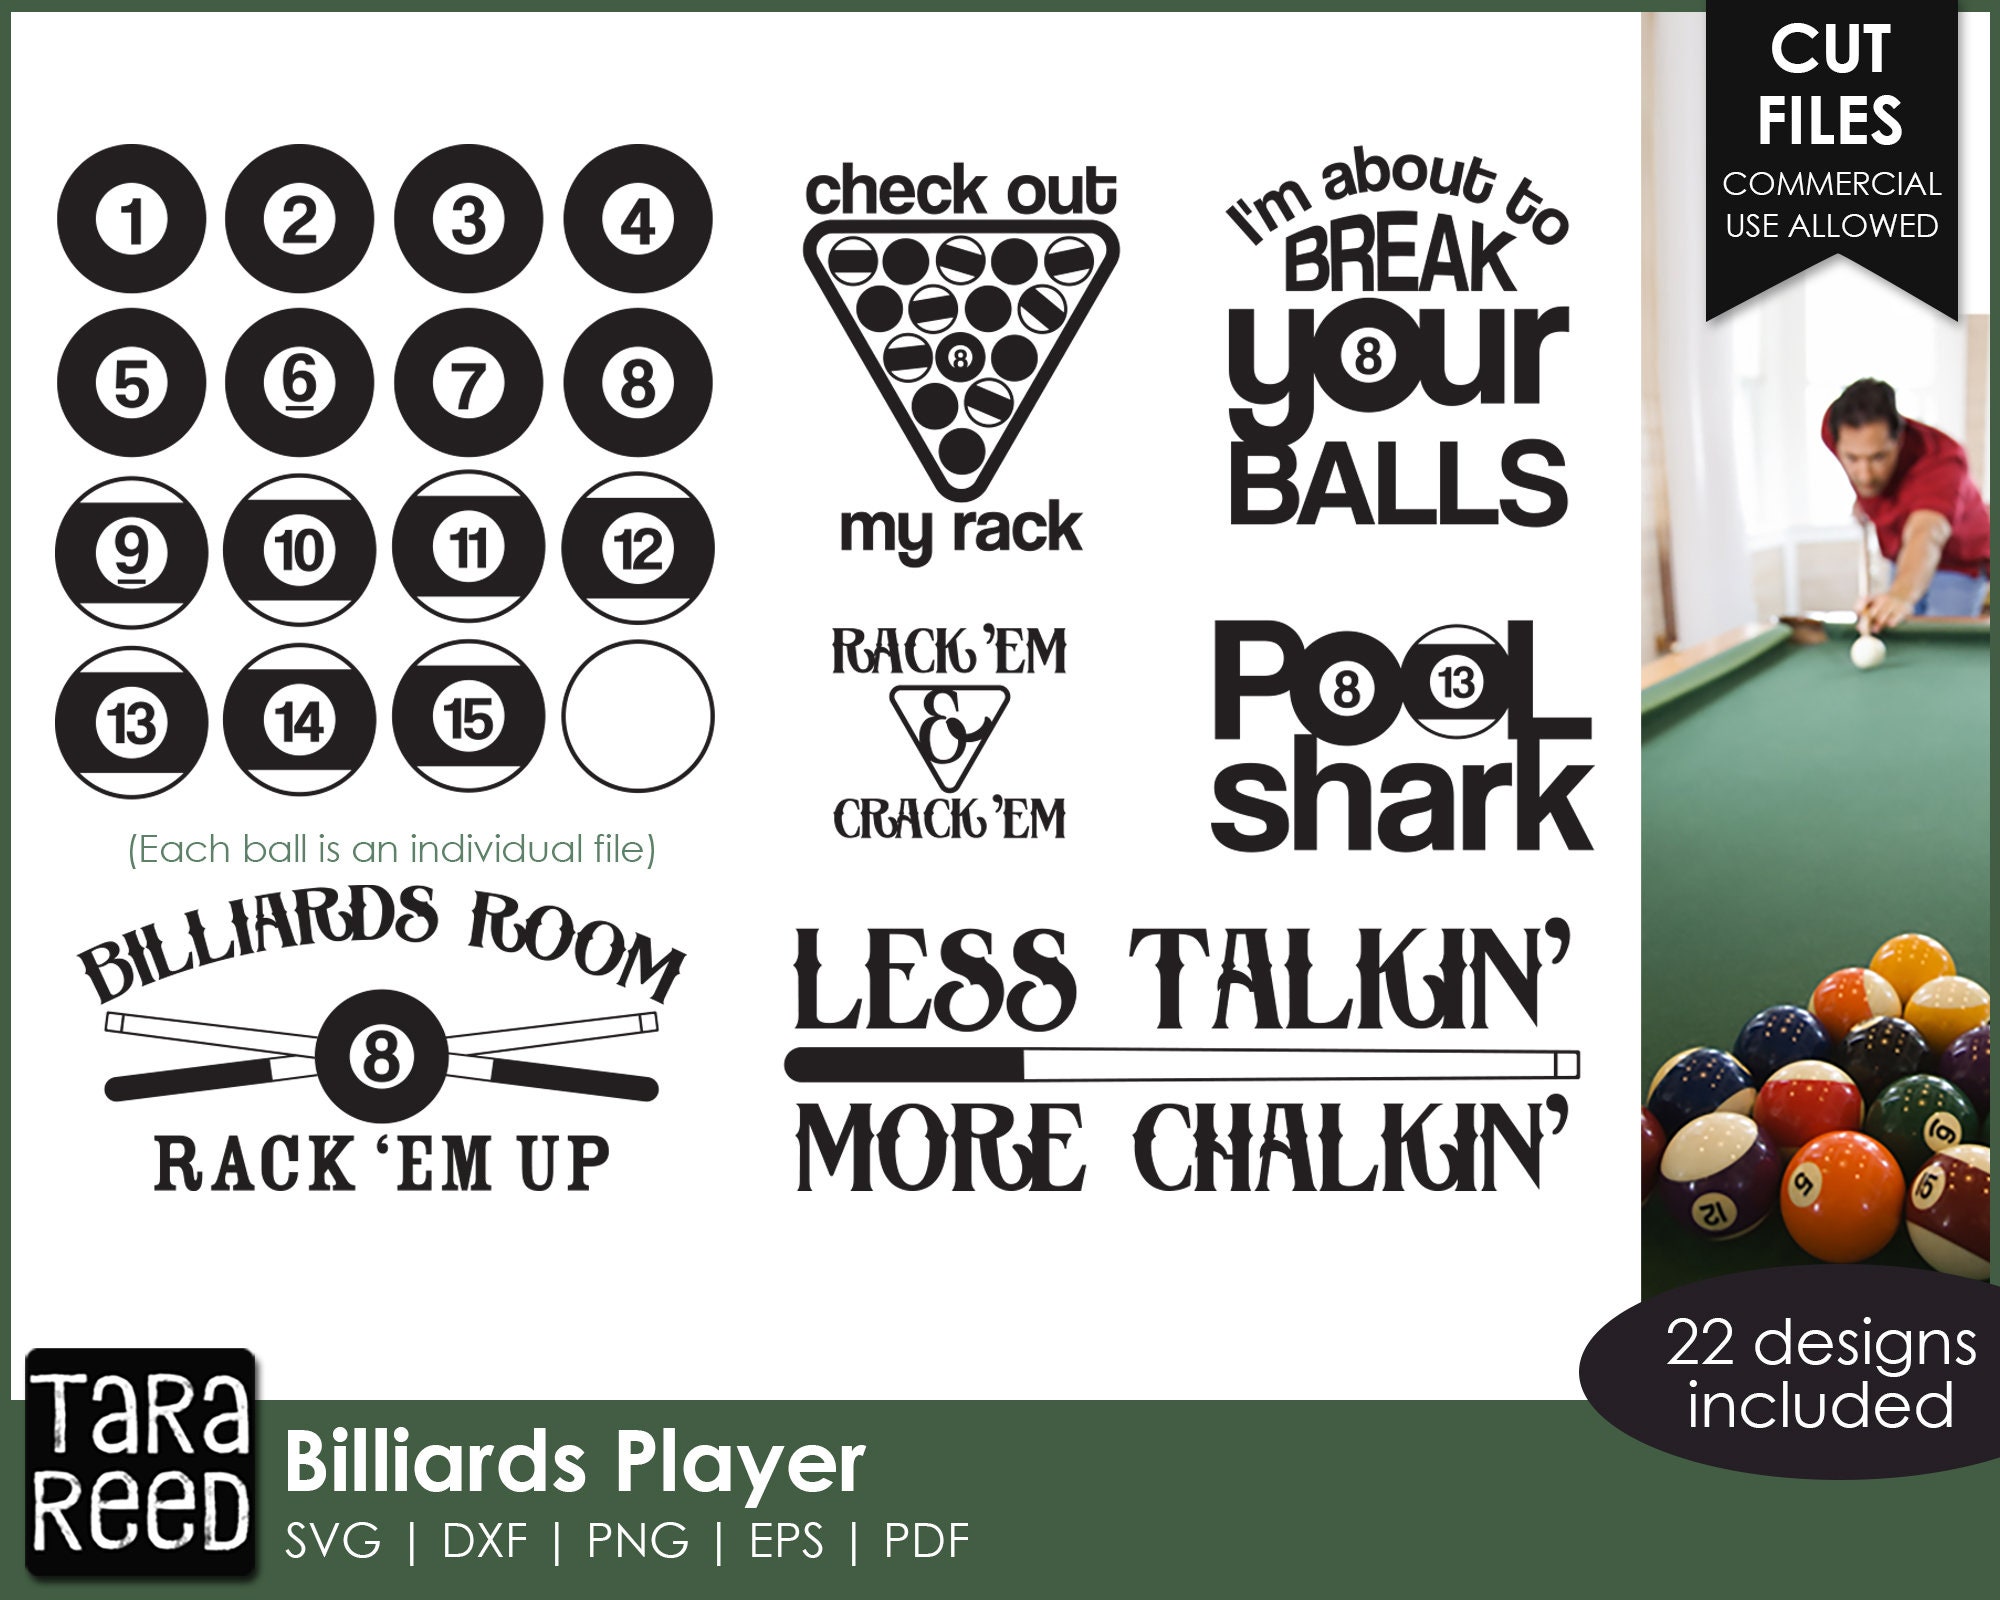 Let's play an online snooker match! : r/billiards